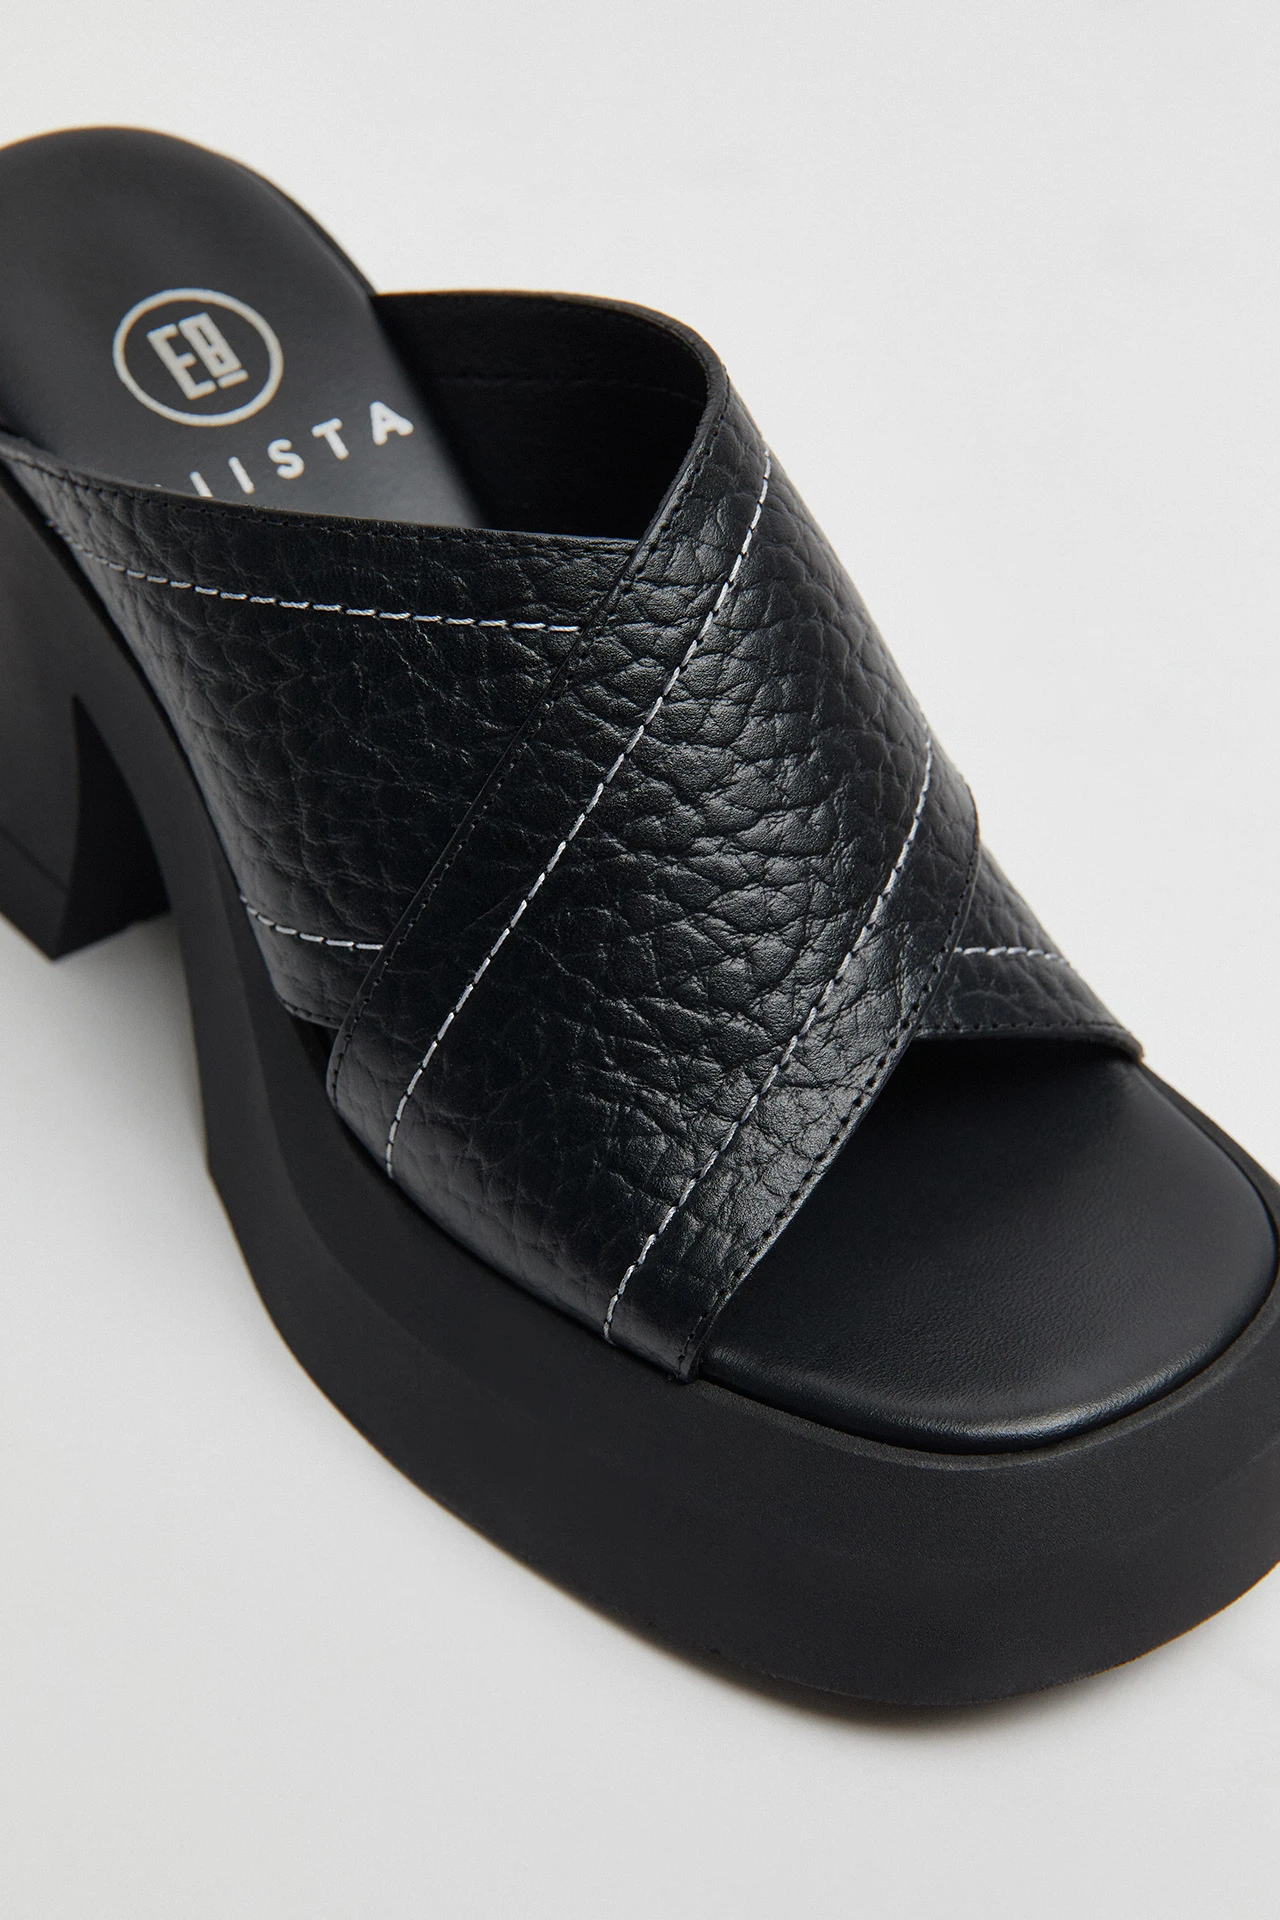 E8-raissa-black-mule-sandal-05